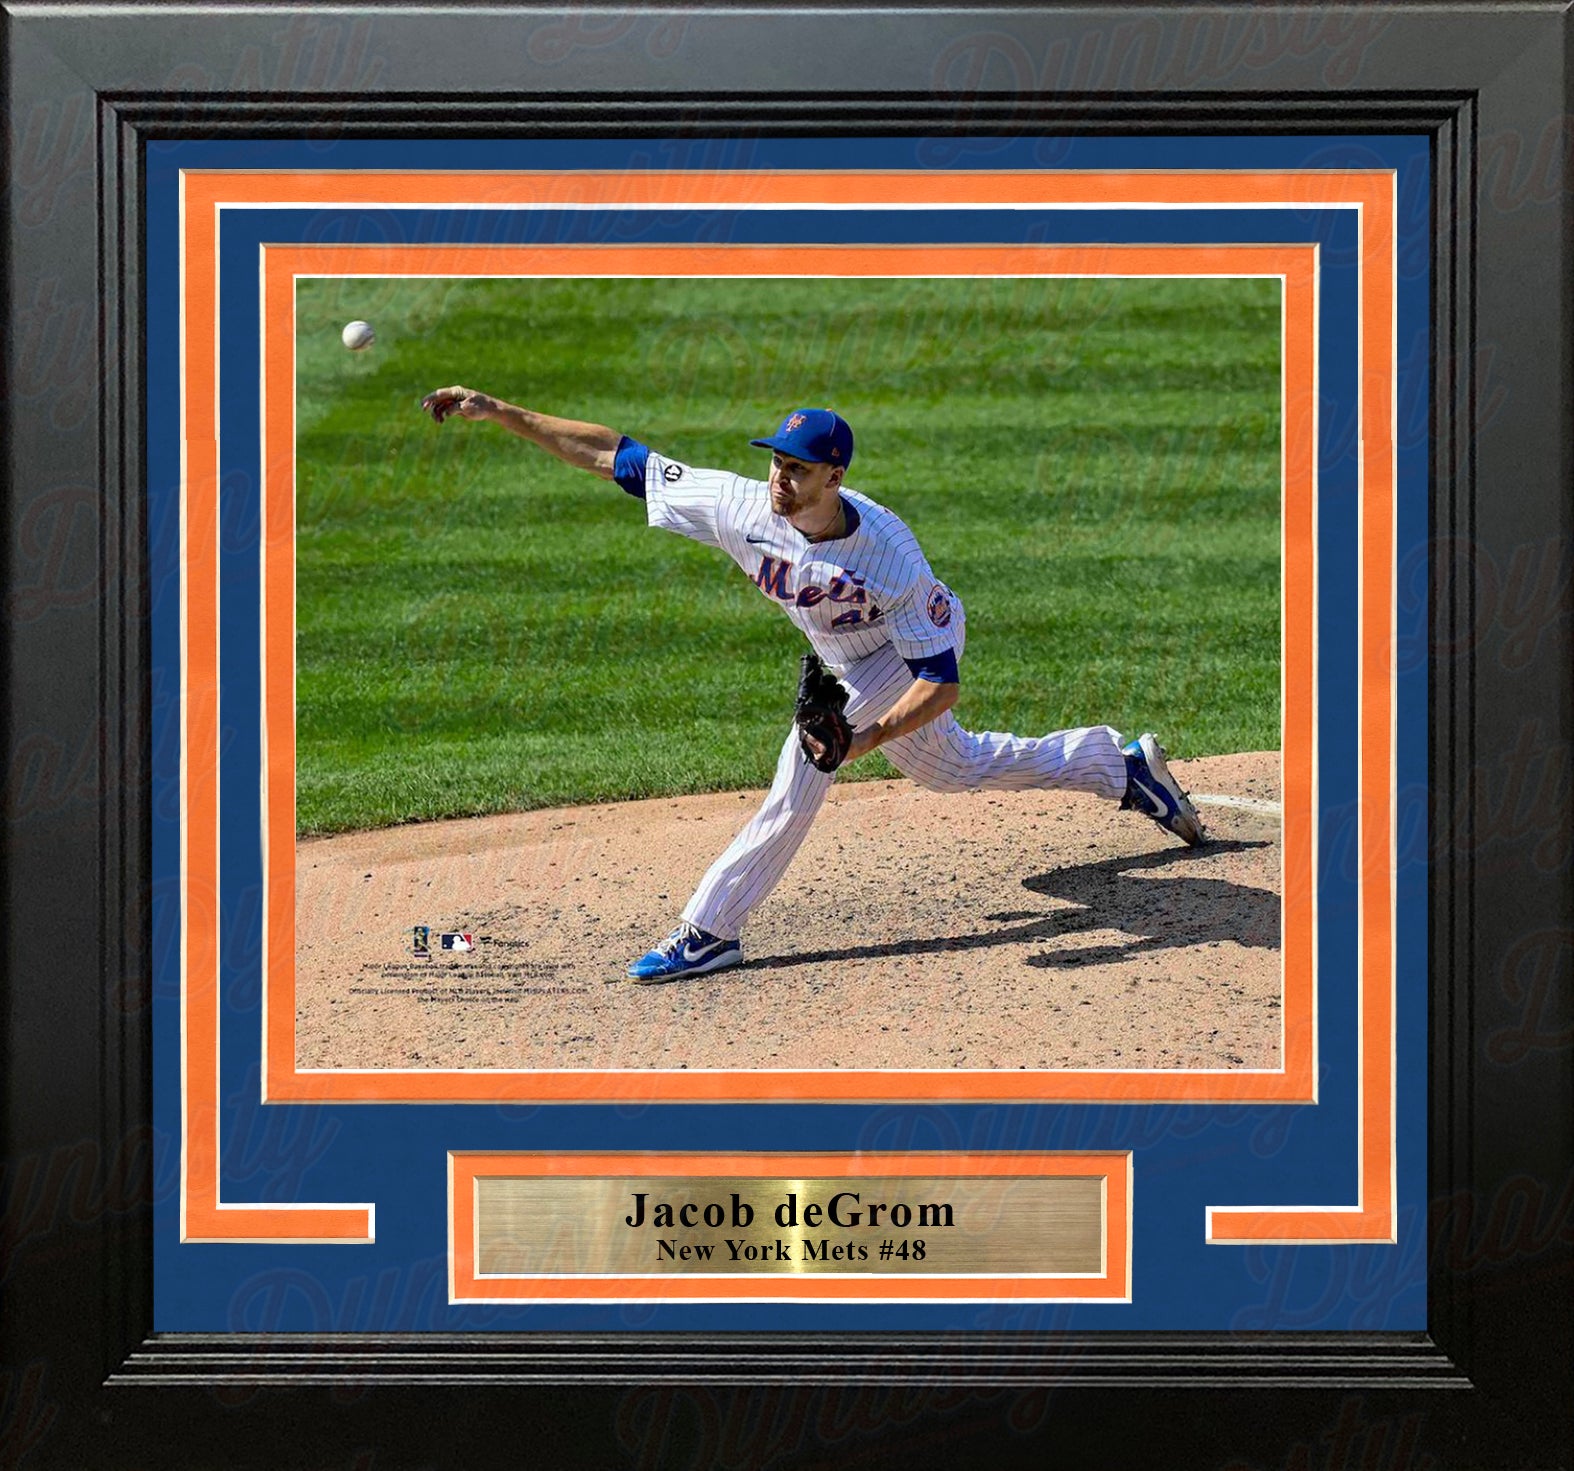 Jacob deGrom in Action New York Mets 8" x 10" Framed Baseball Photo - Dynasty Sports & Framing 